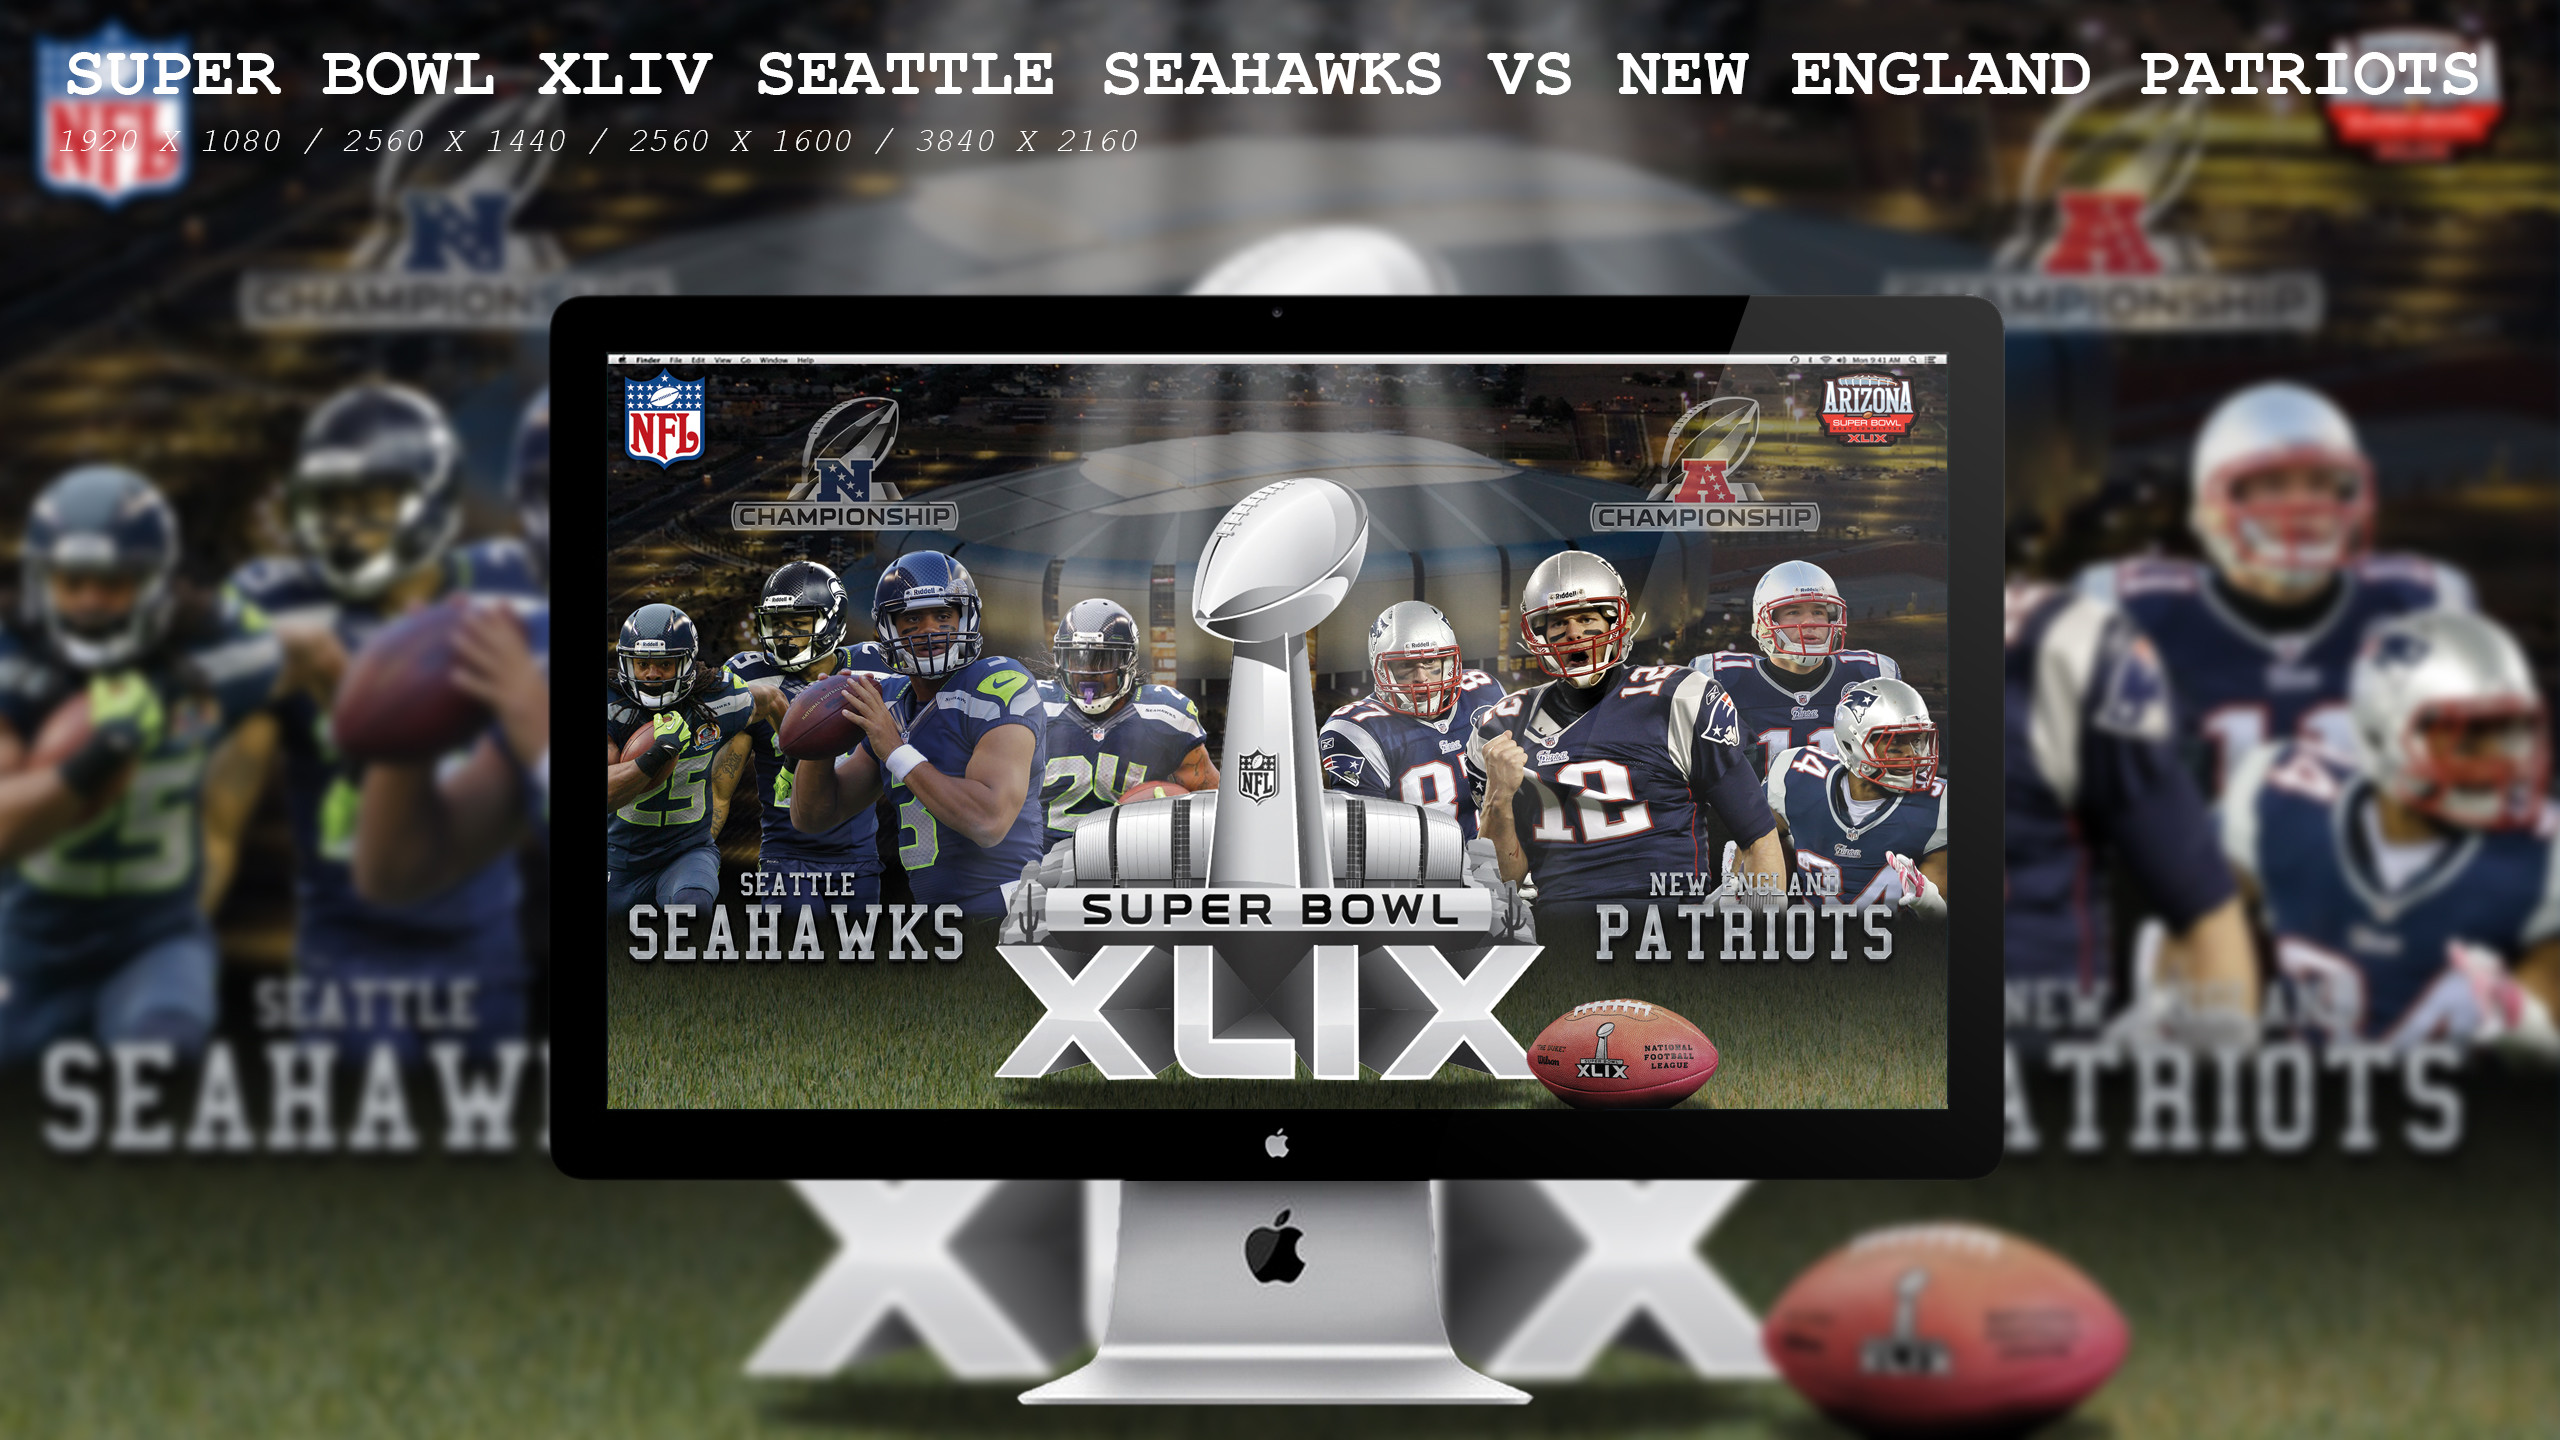 2560x1440 ... Super Bowl XLIV Seattle Seahawks Vs Patriots by BeAware8